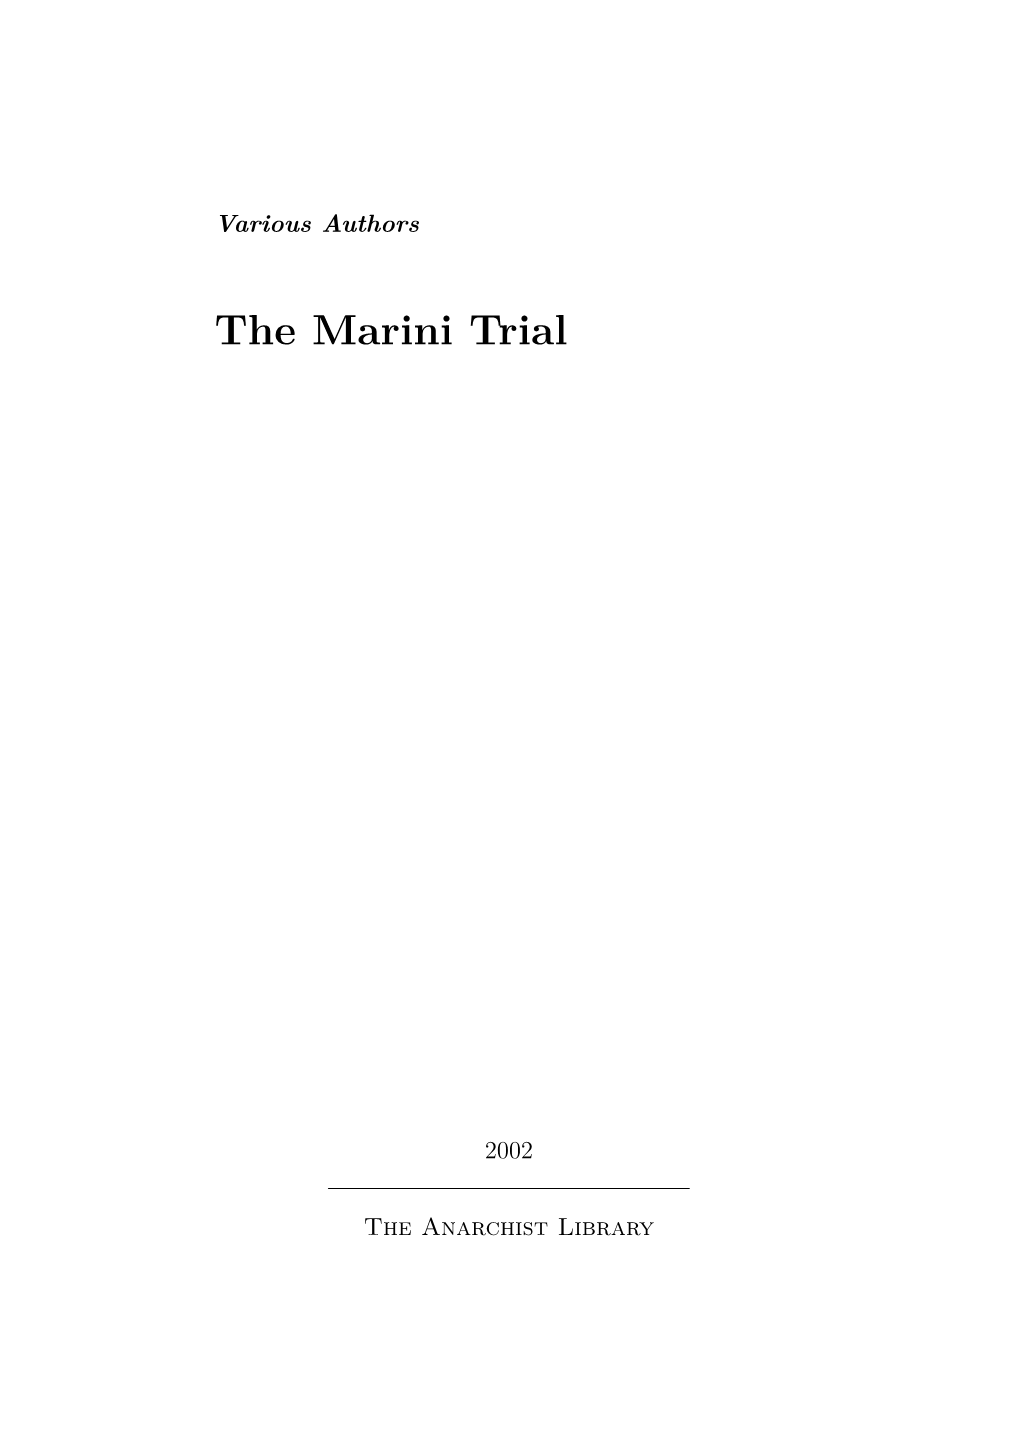 The Marini Trial